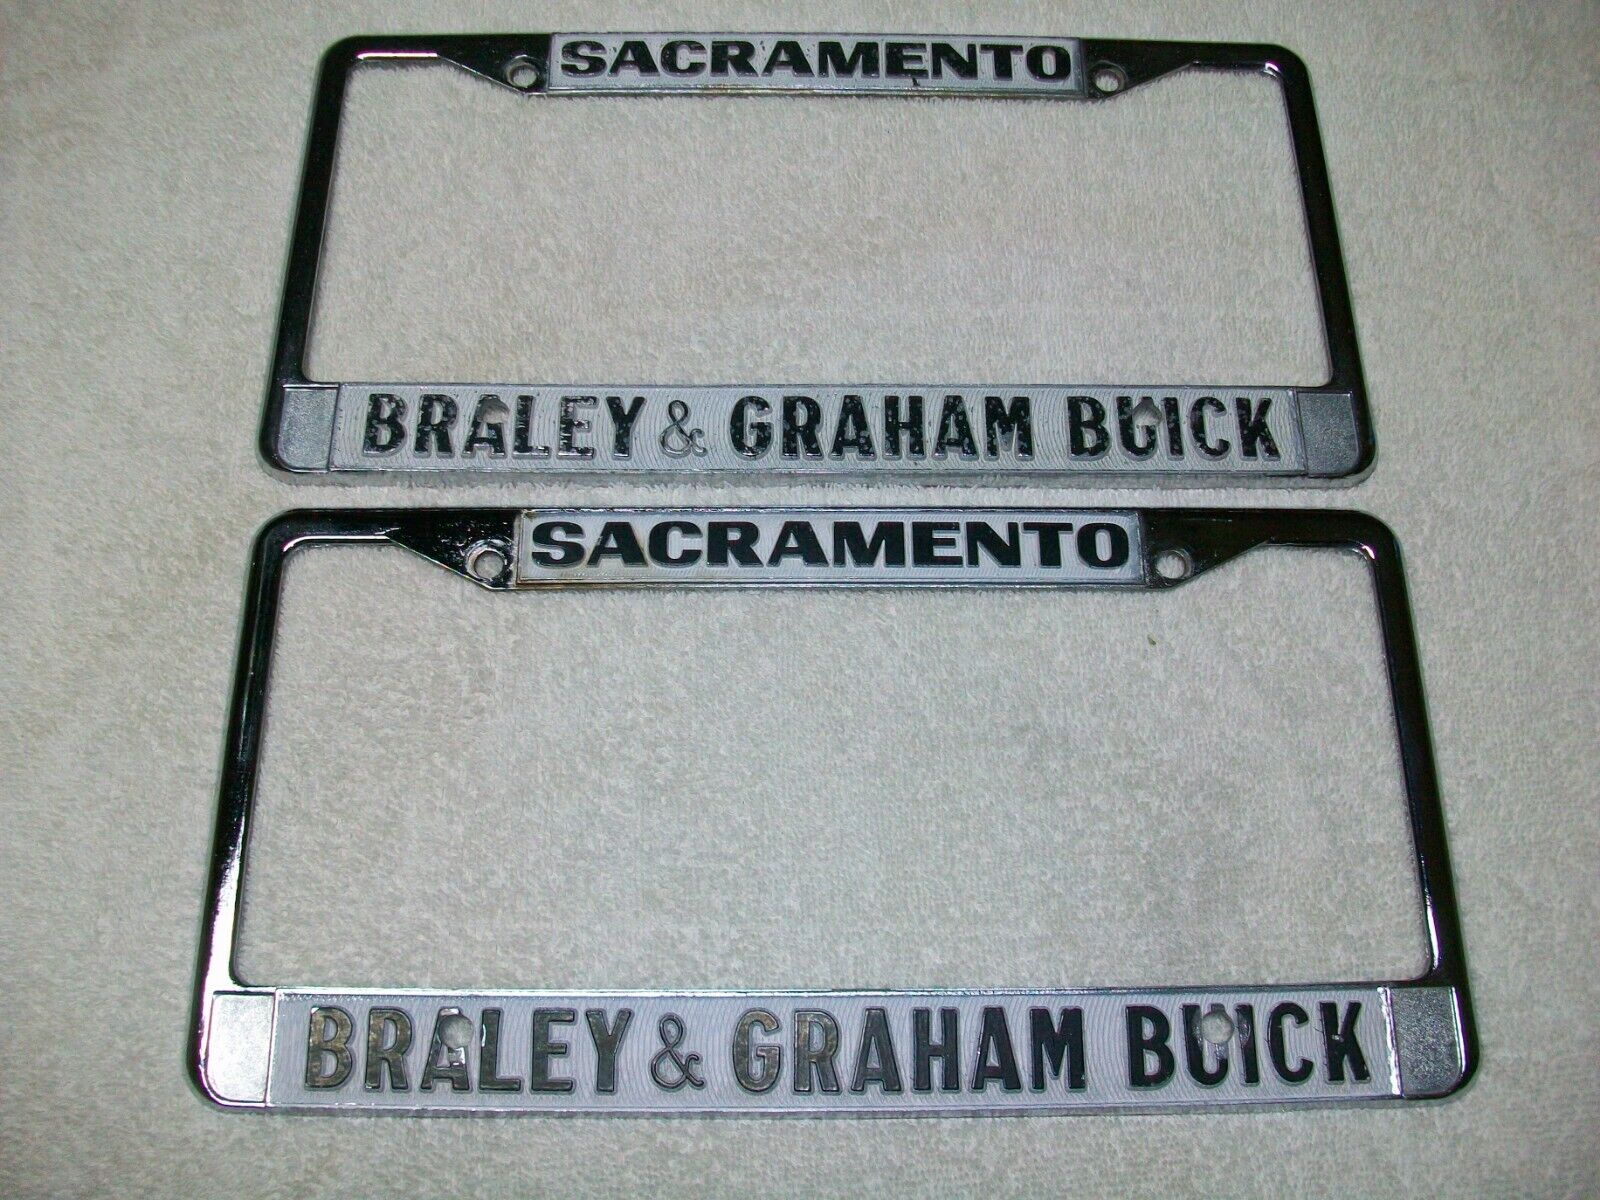 Braley and Graham Buick Sacramento Dealership Metal License Plate Frame 